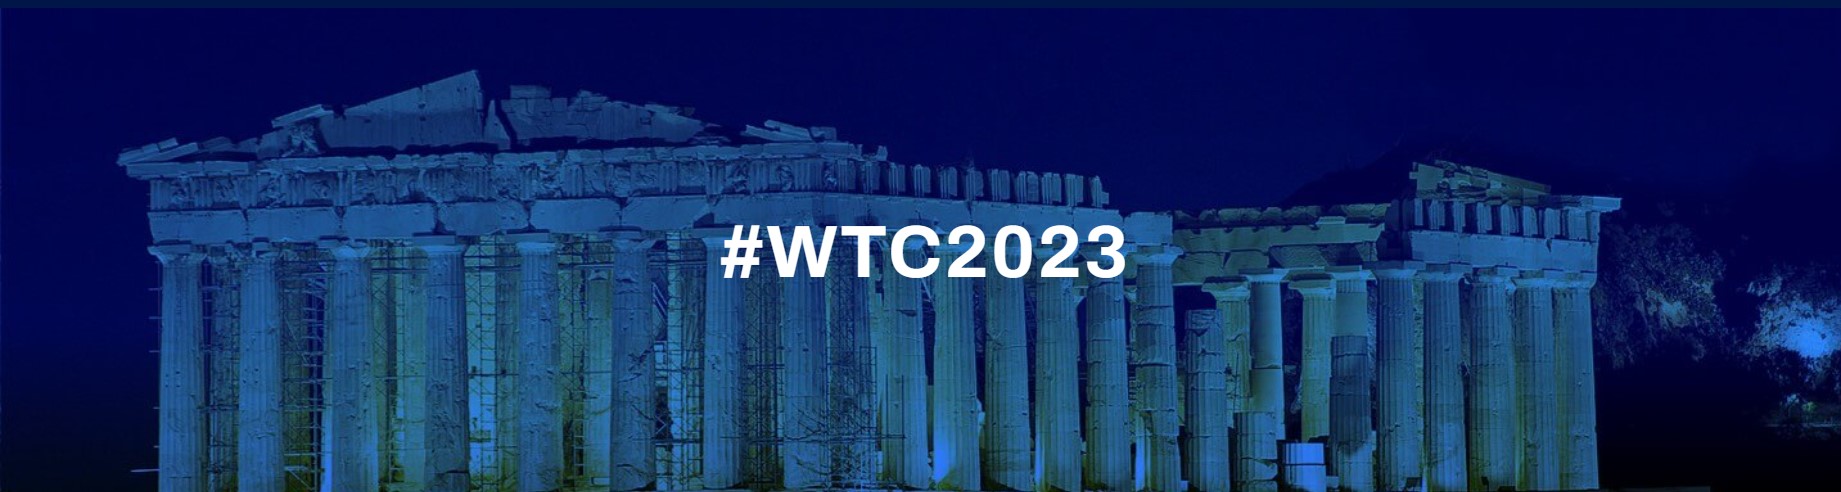 WTC 2023 sponsorship GM 